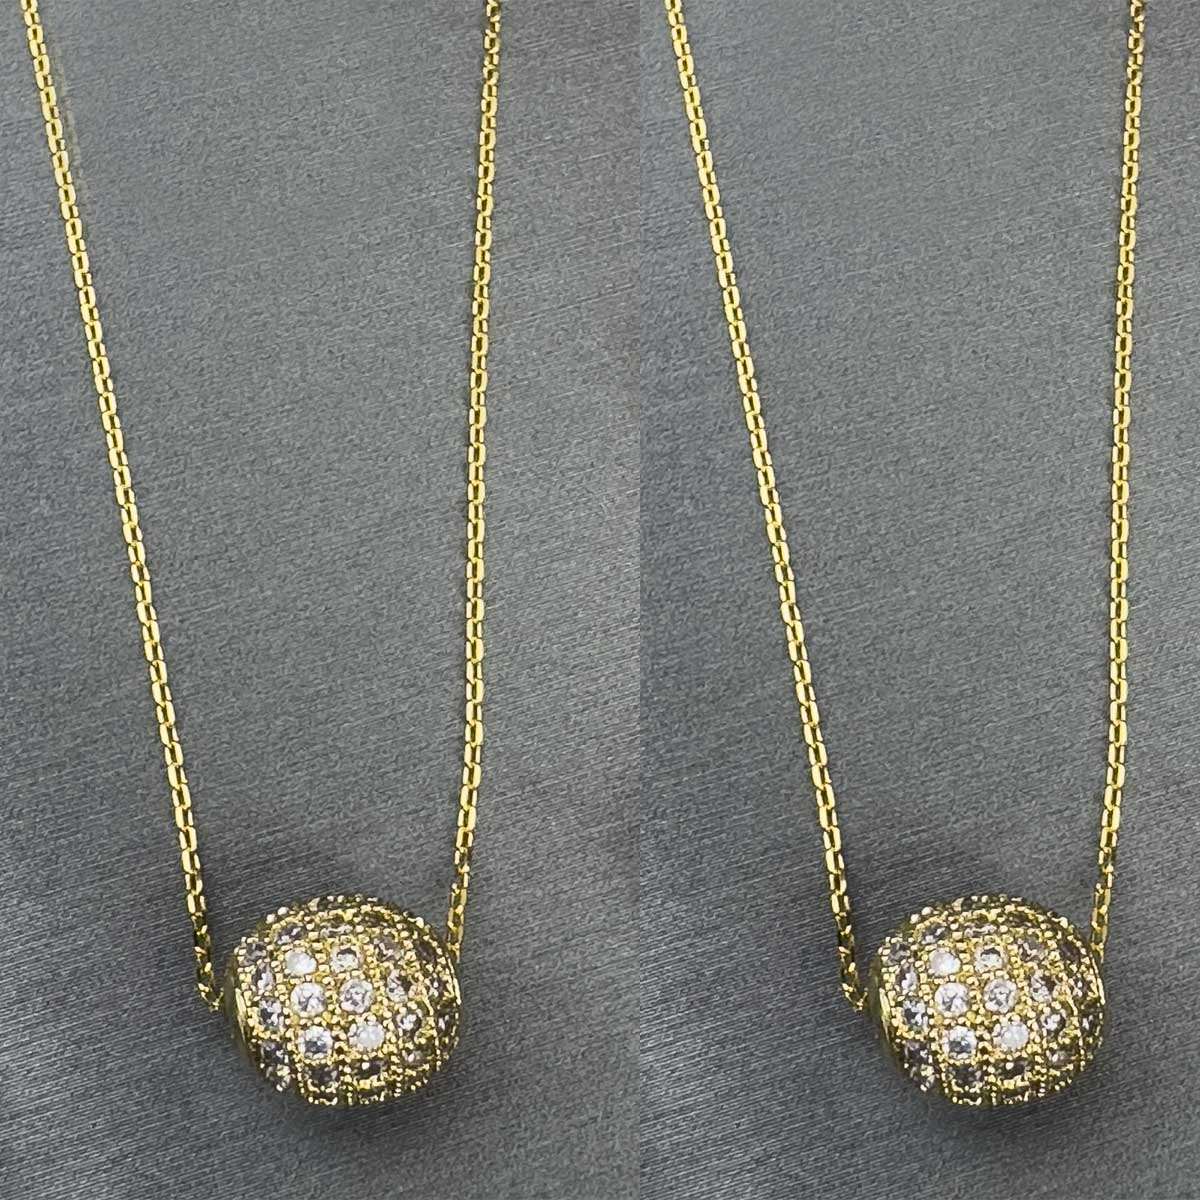 18K Gold 2 Brass Balls Necklace